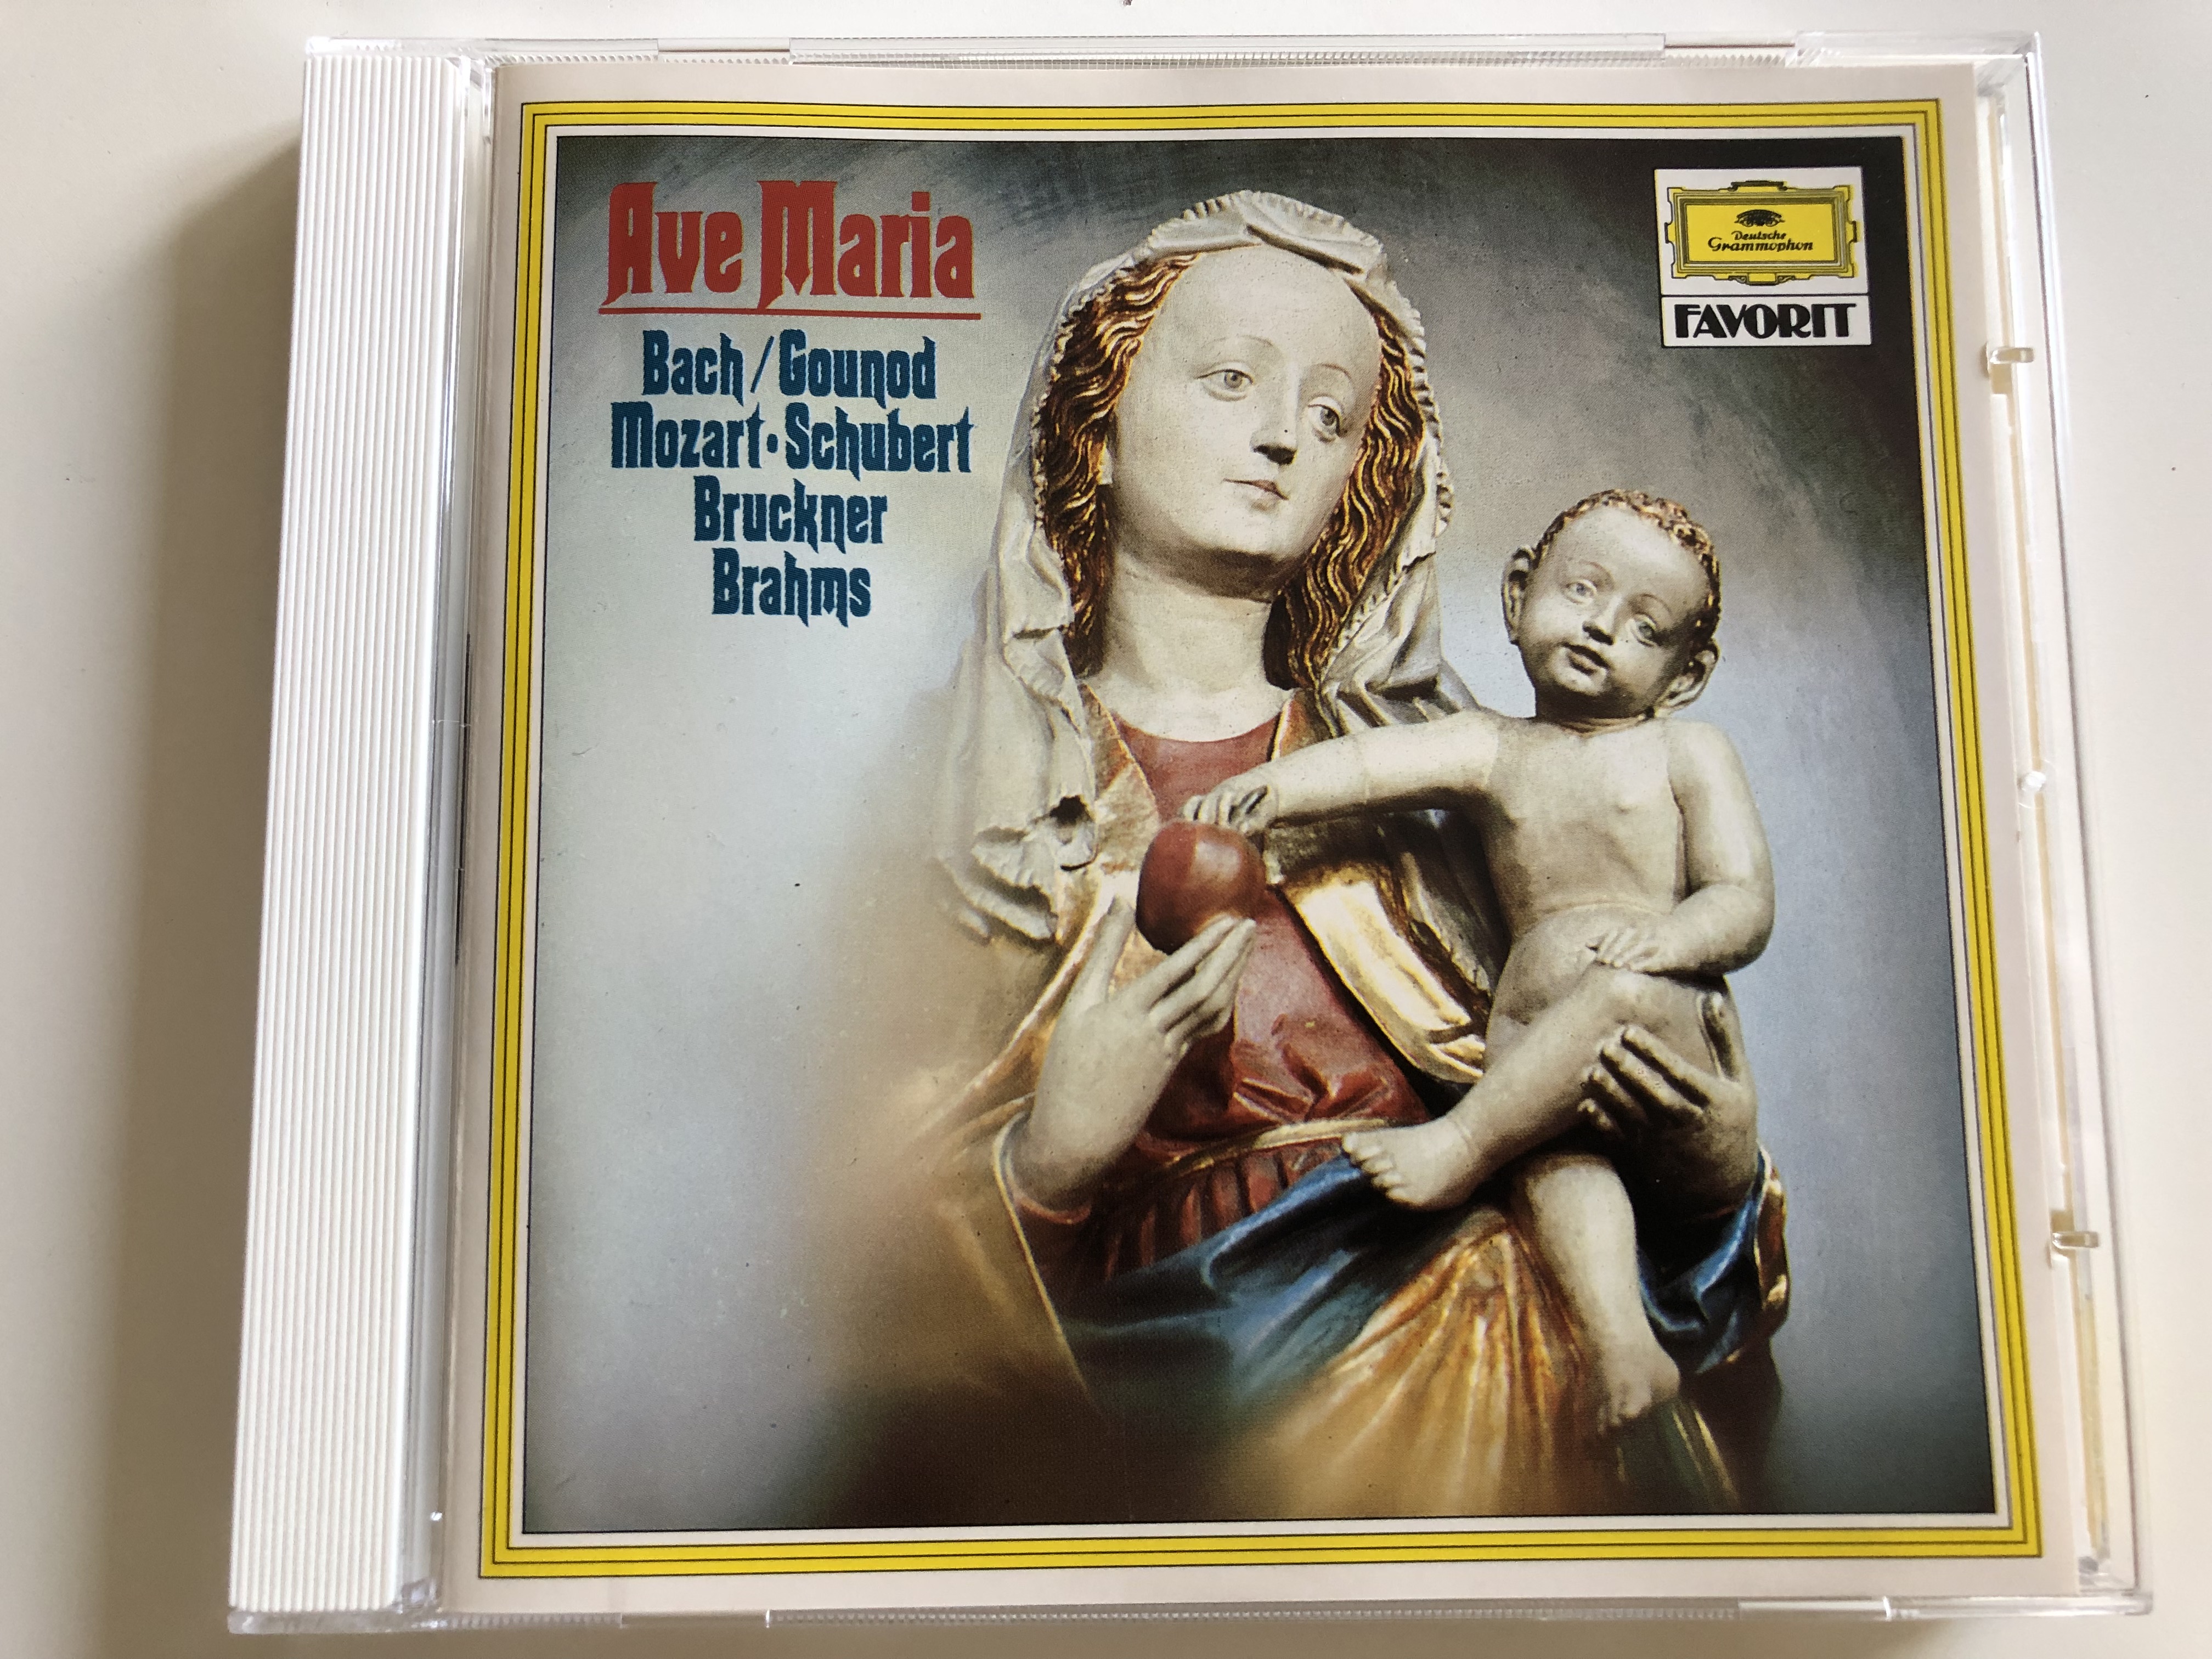 Ave Maria / Favorite Choruses / Bach, Gounod, Mozart, Schubert, Bruckner,  Brahms / Audio CD / Deutsche Gramophon / 423777-2 - bibleinmylanguage